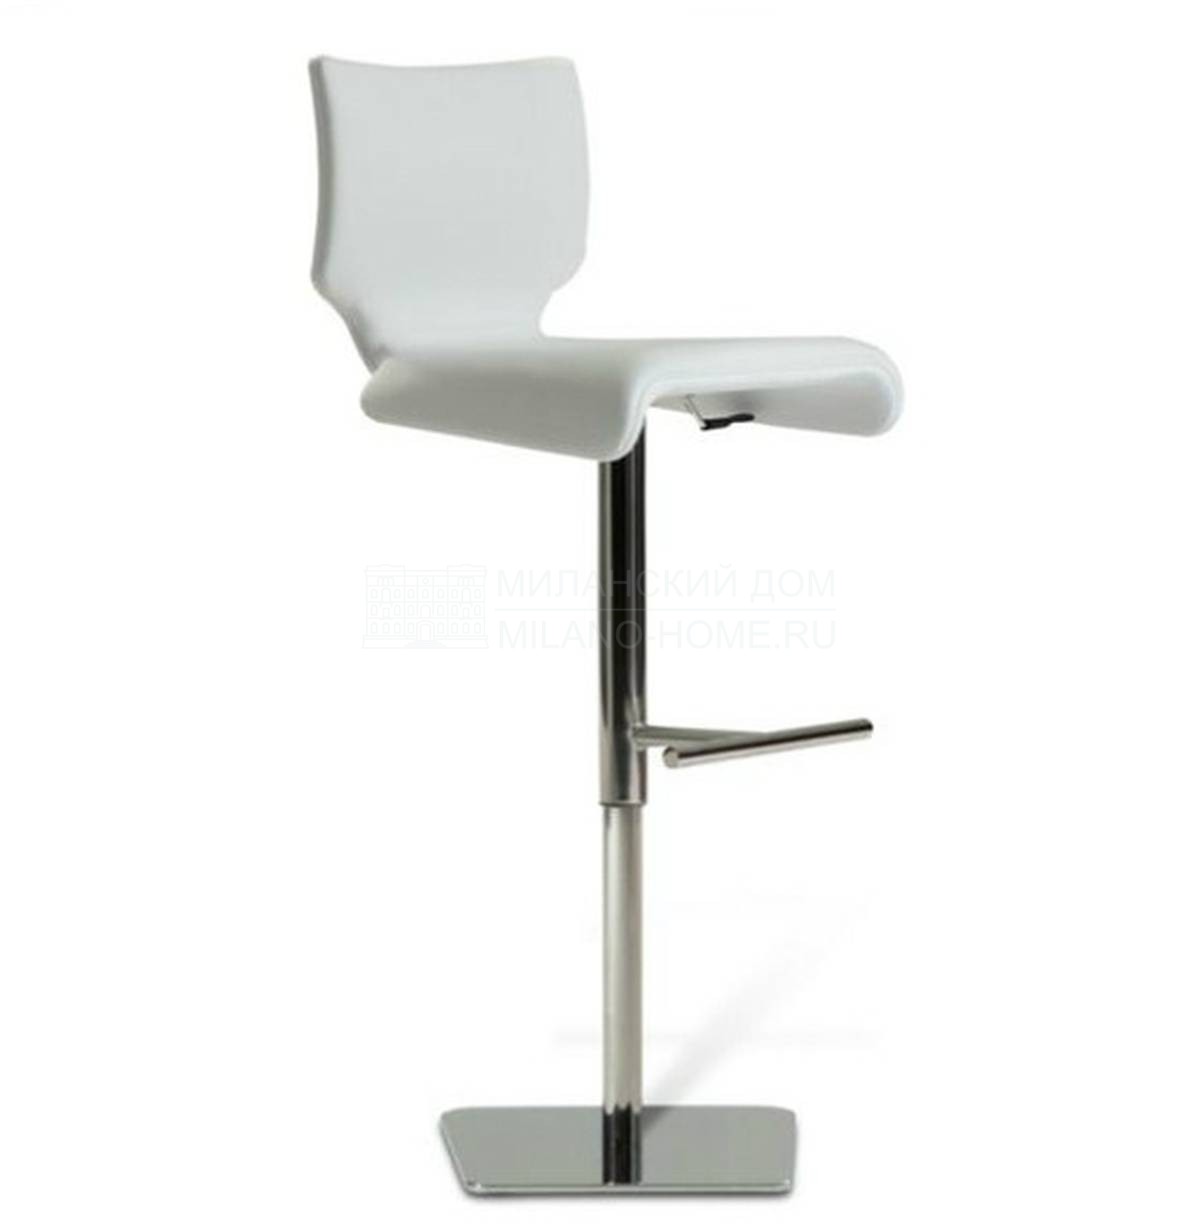 Барный стул Chabada up & pown stool-epoxy finish из Франции фабрики ROCHE BOBOIS